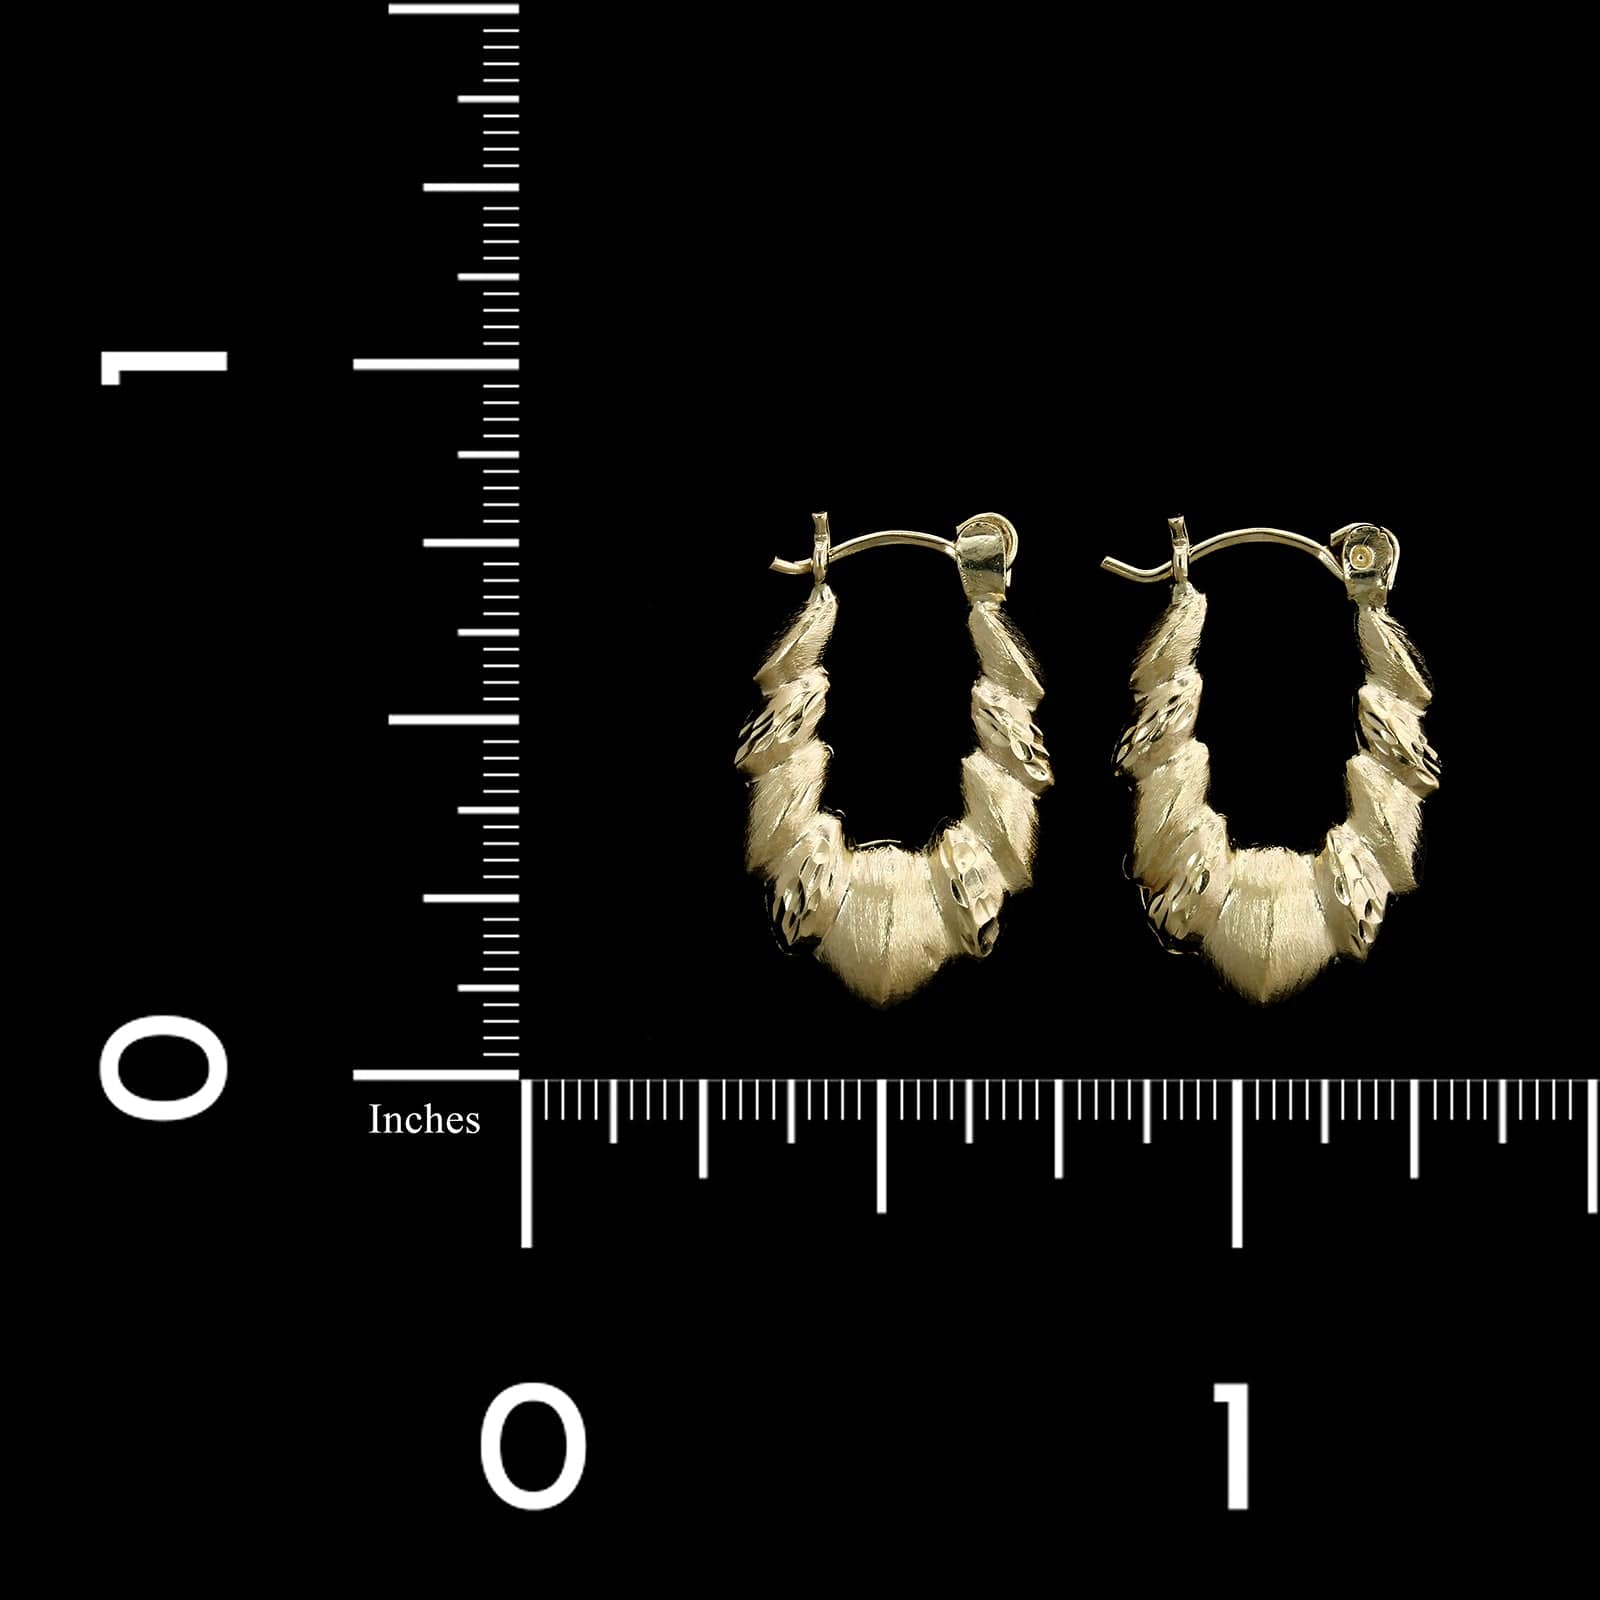 14K Yellow Gold Estate Hoop Earrings